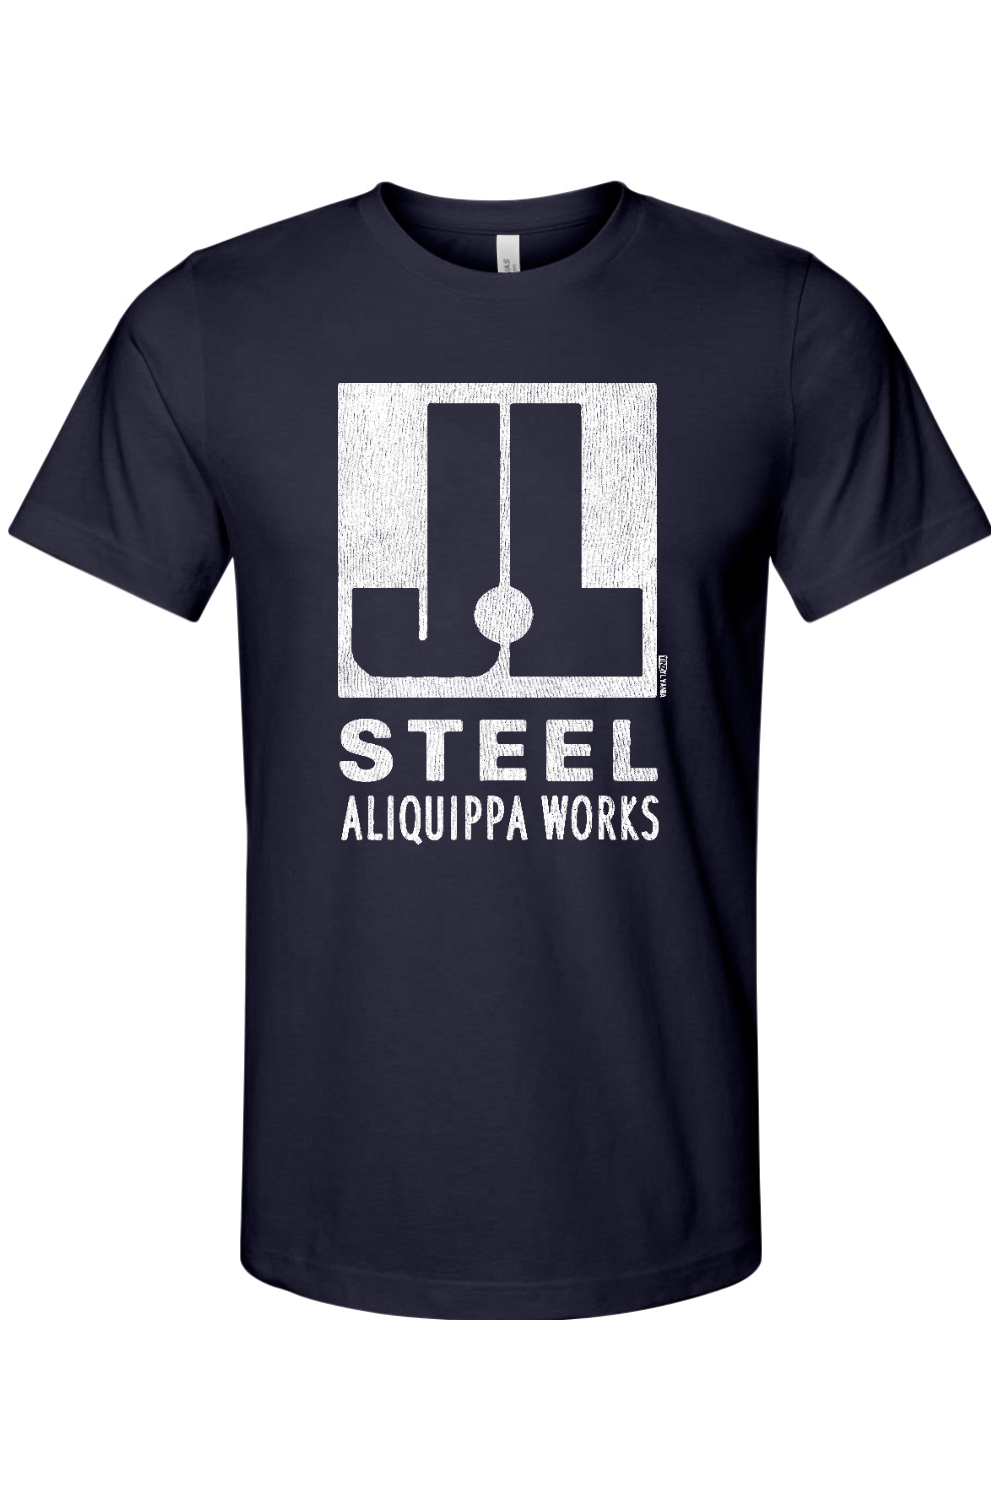 J&L Steel - Aliquippa Works - Bella + Canvas Jersey Tee - Yinzylvania